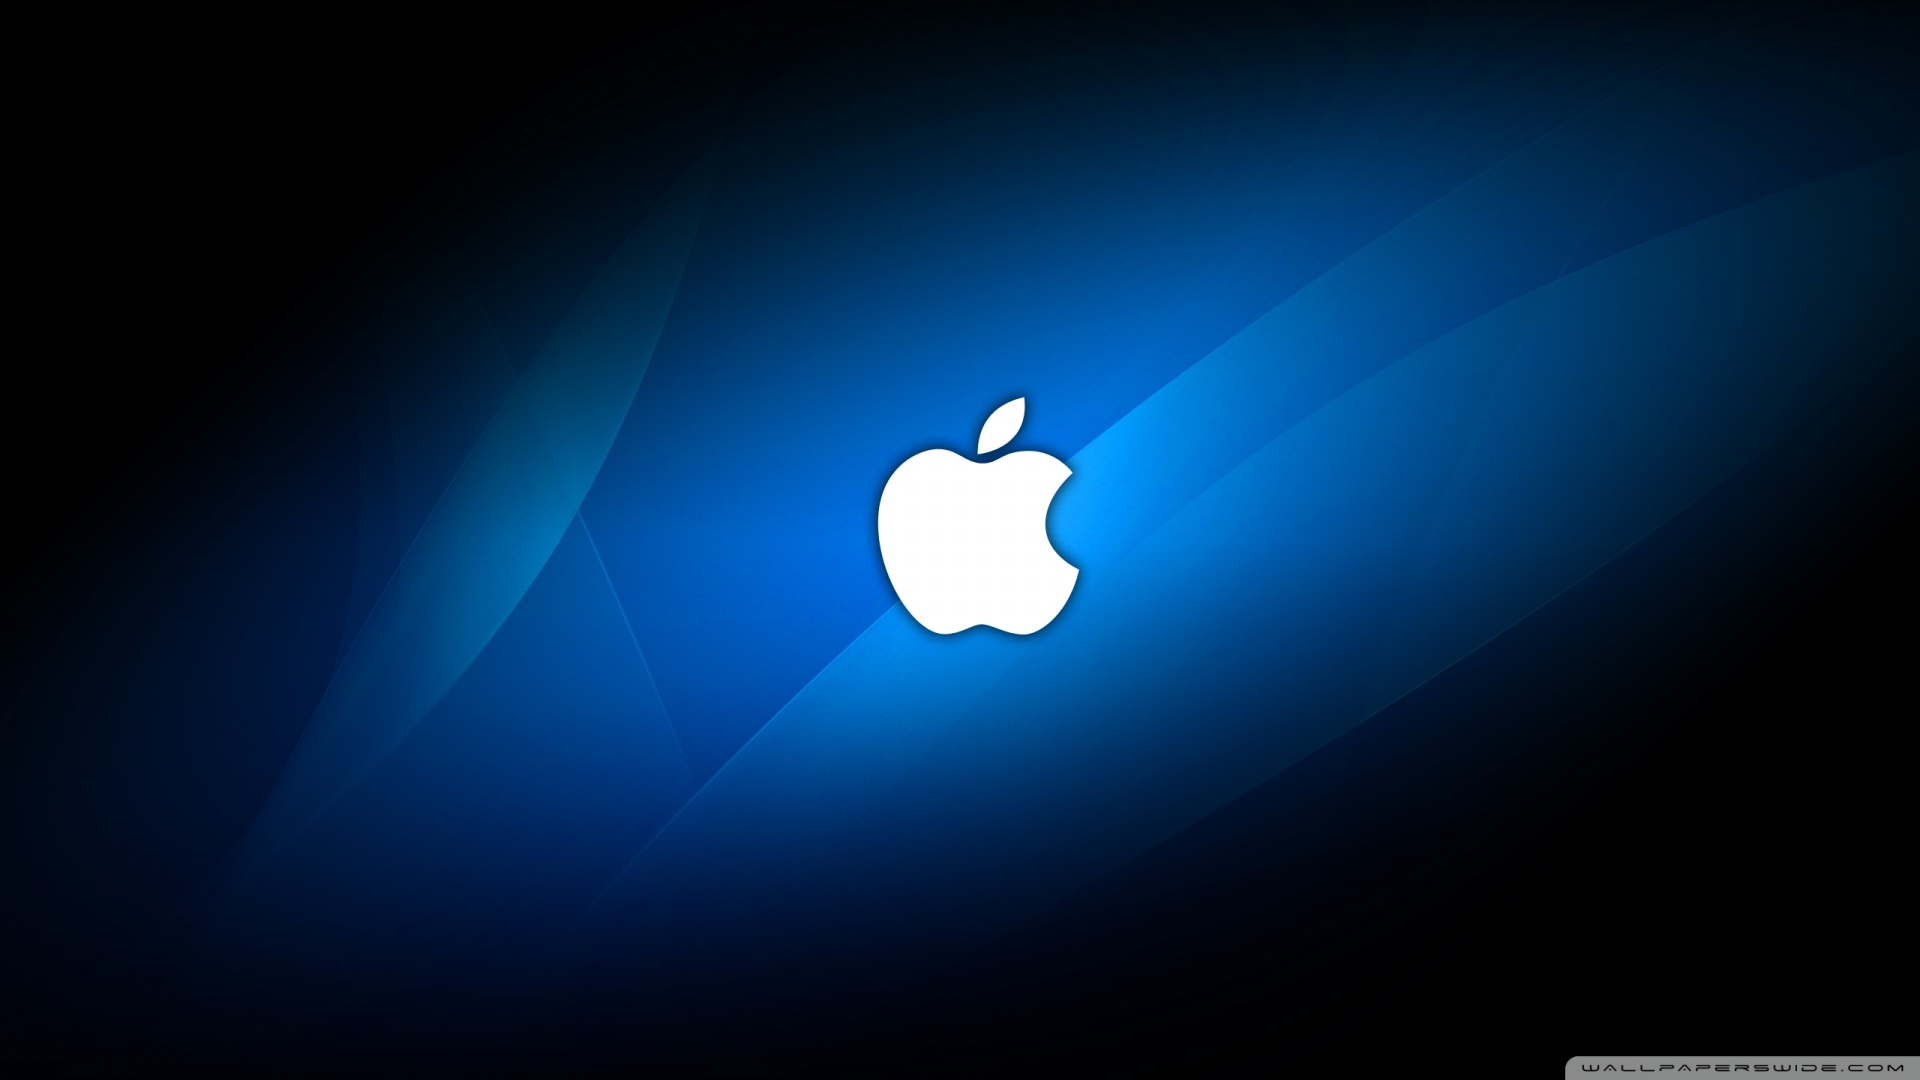 Cool Apple Wallpaper Mac Image